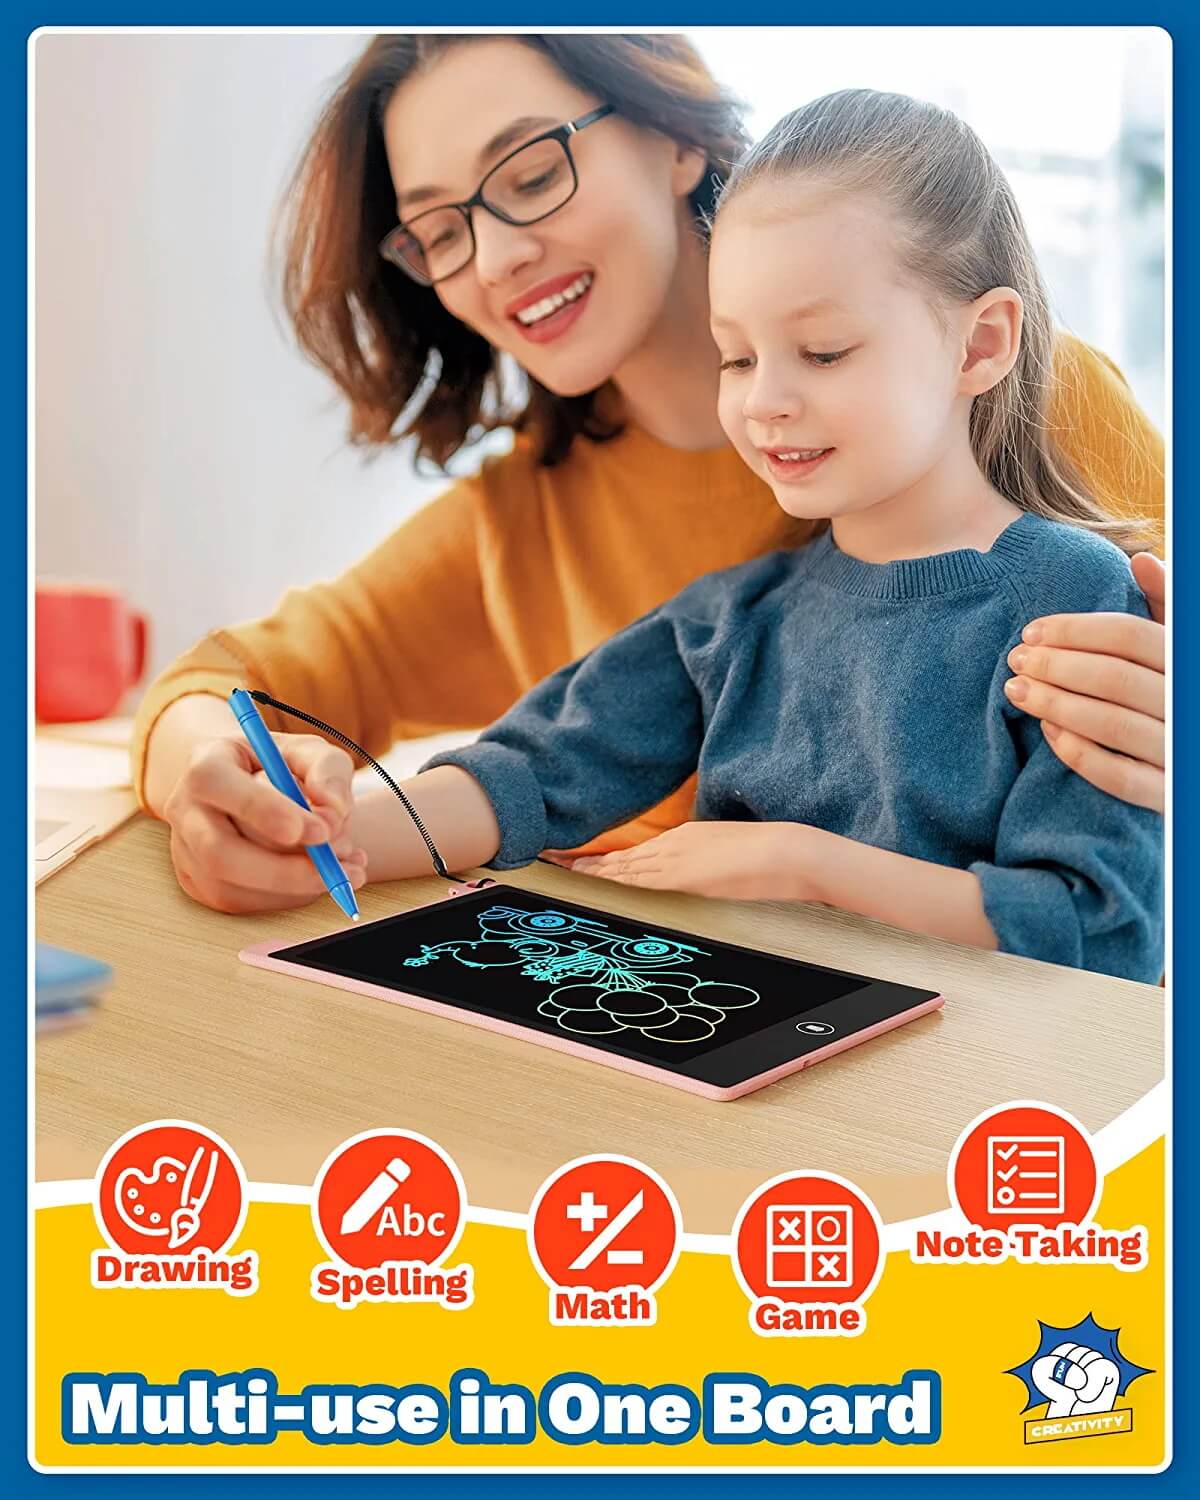 TEKFUN 2 Pack LCD Writing Tablet with Anti-Lost Stylus, 10in Erasable Doodle Board Coloring Drawing Pad for Kids - Mytekfun